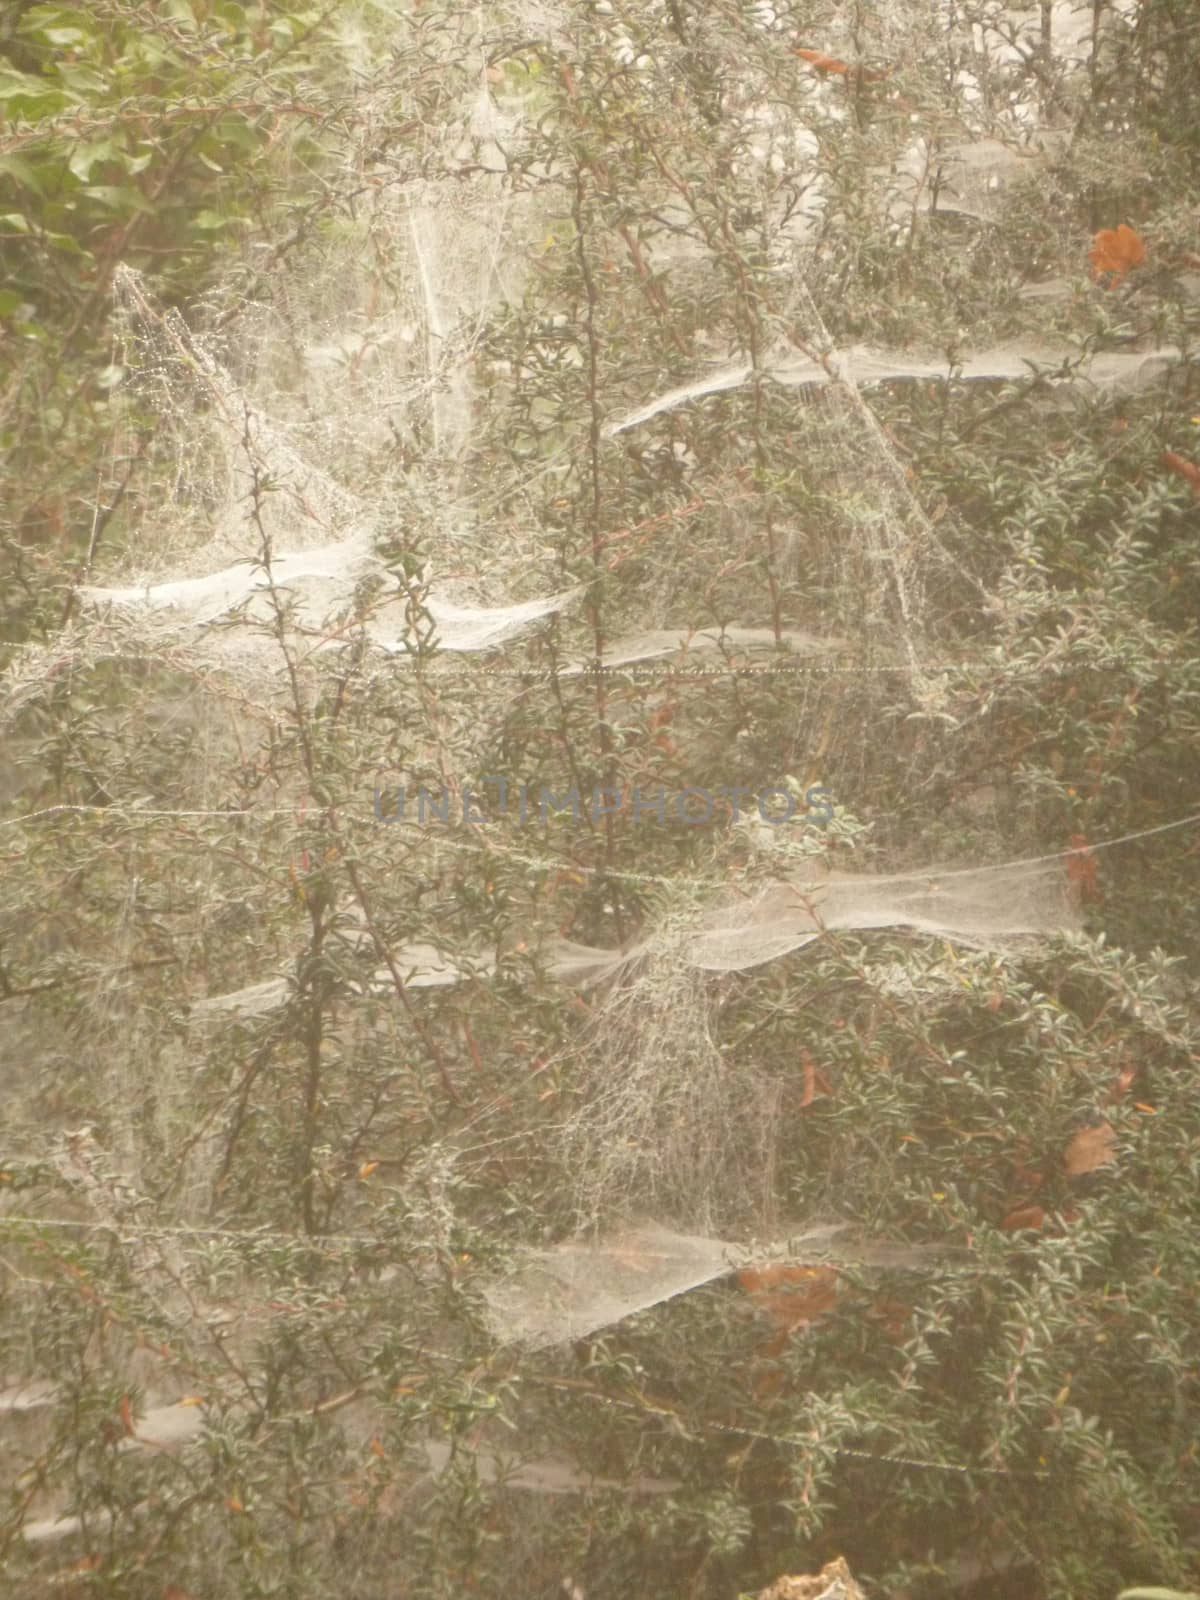 Spiderwebs in Fog by James53145